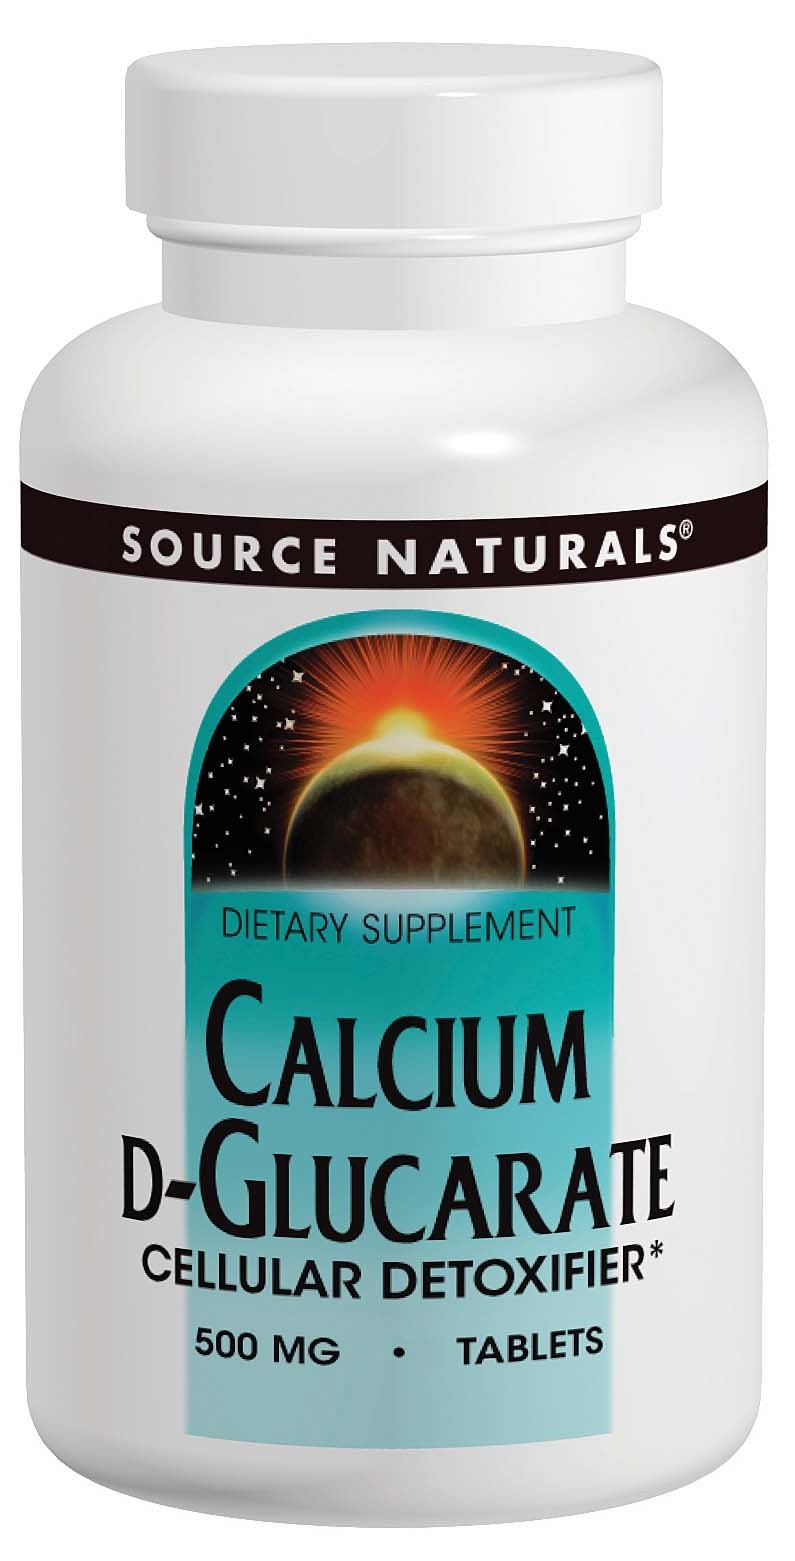 Calcium D-Glucarate for Fibroids